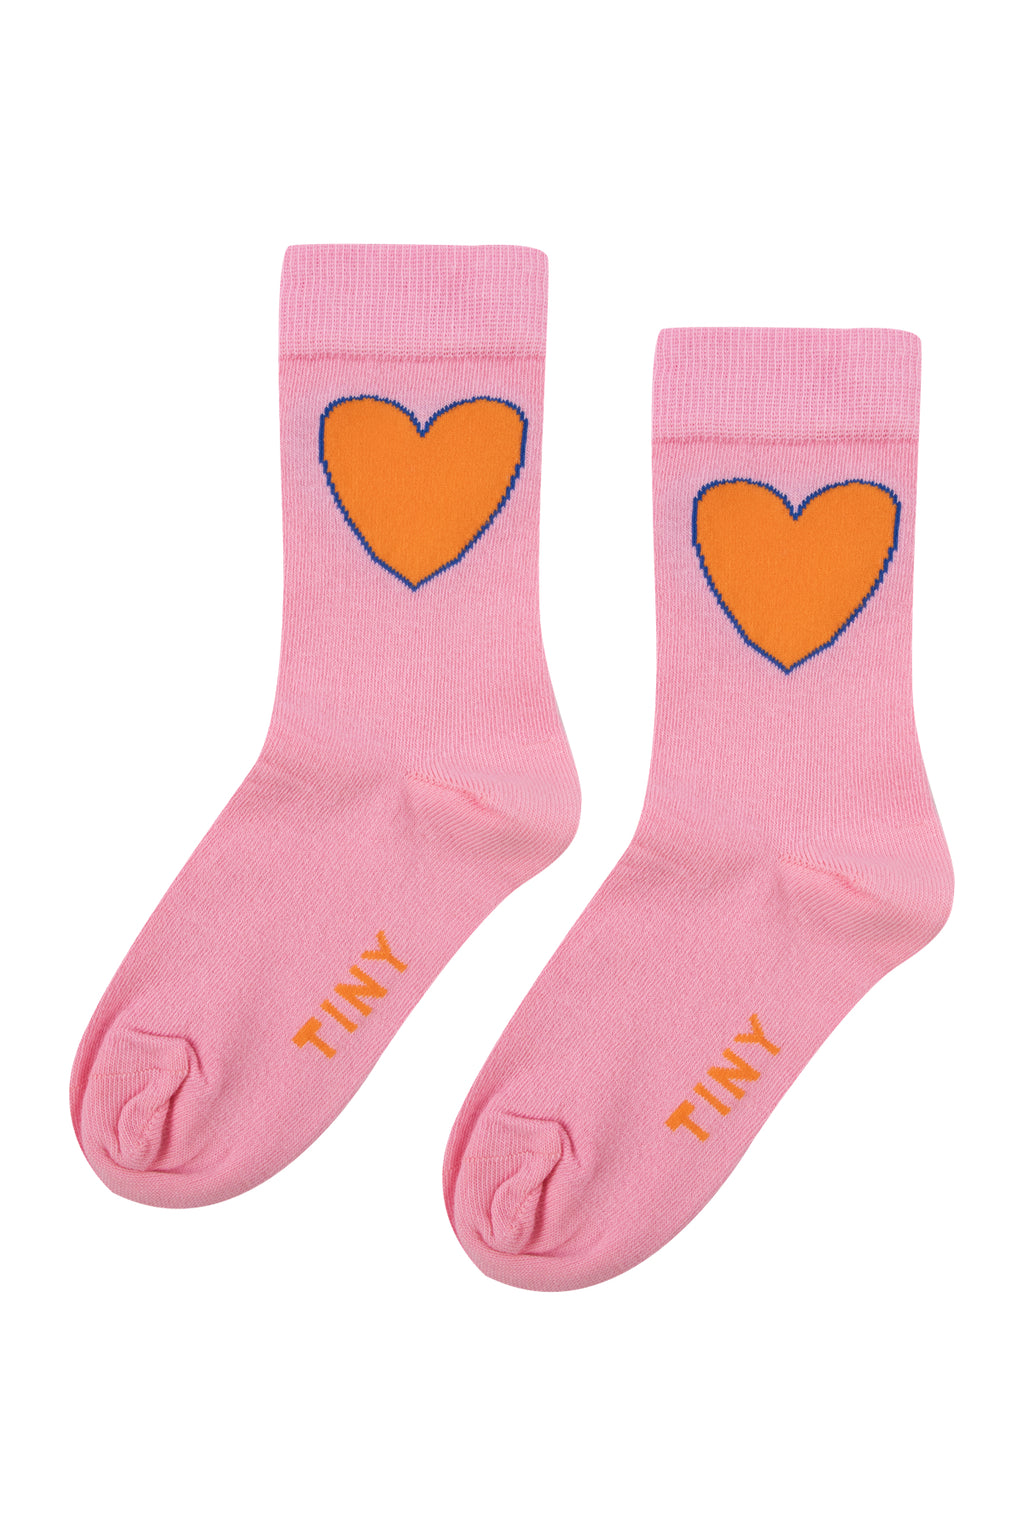 Tiny Cottons Hearts Medium Socks - Pink